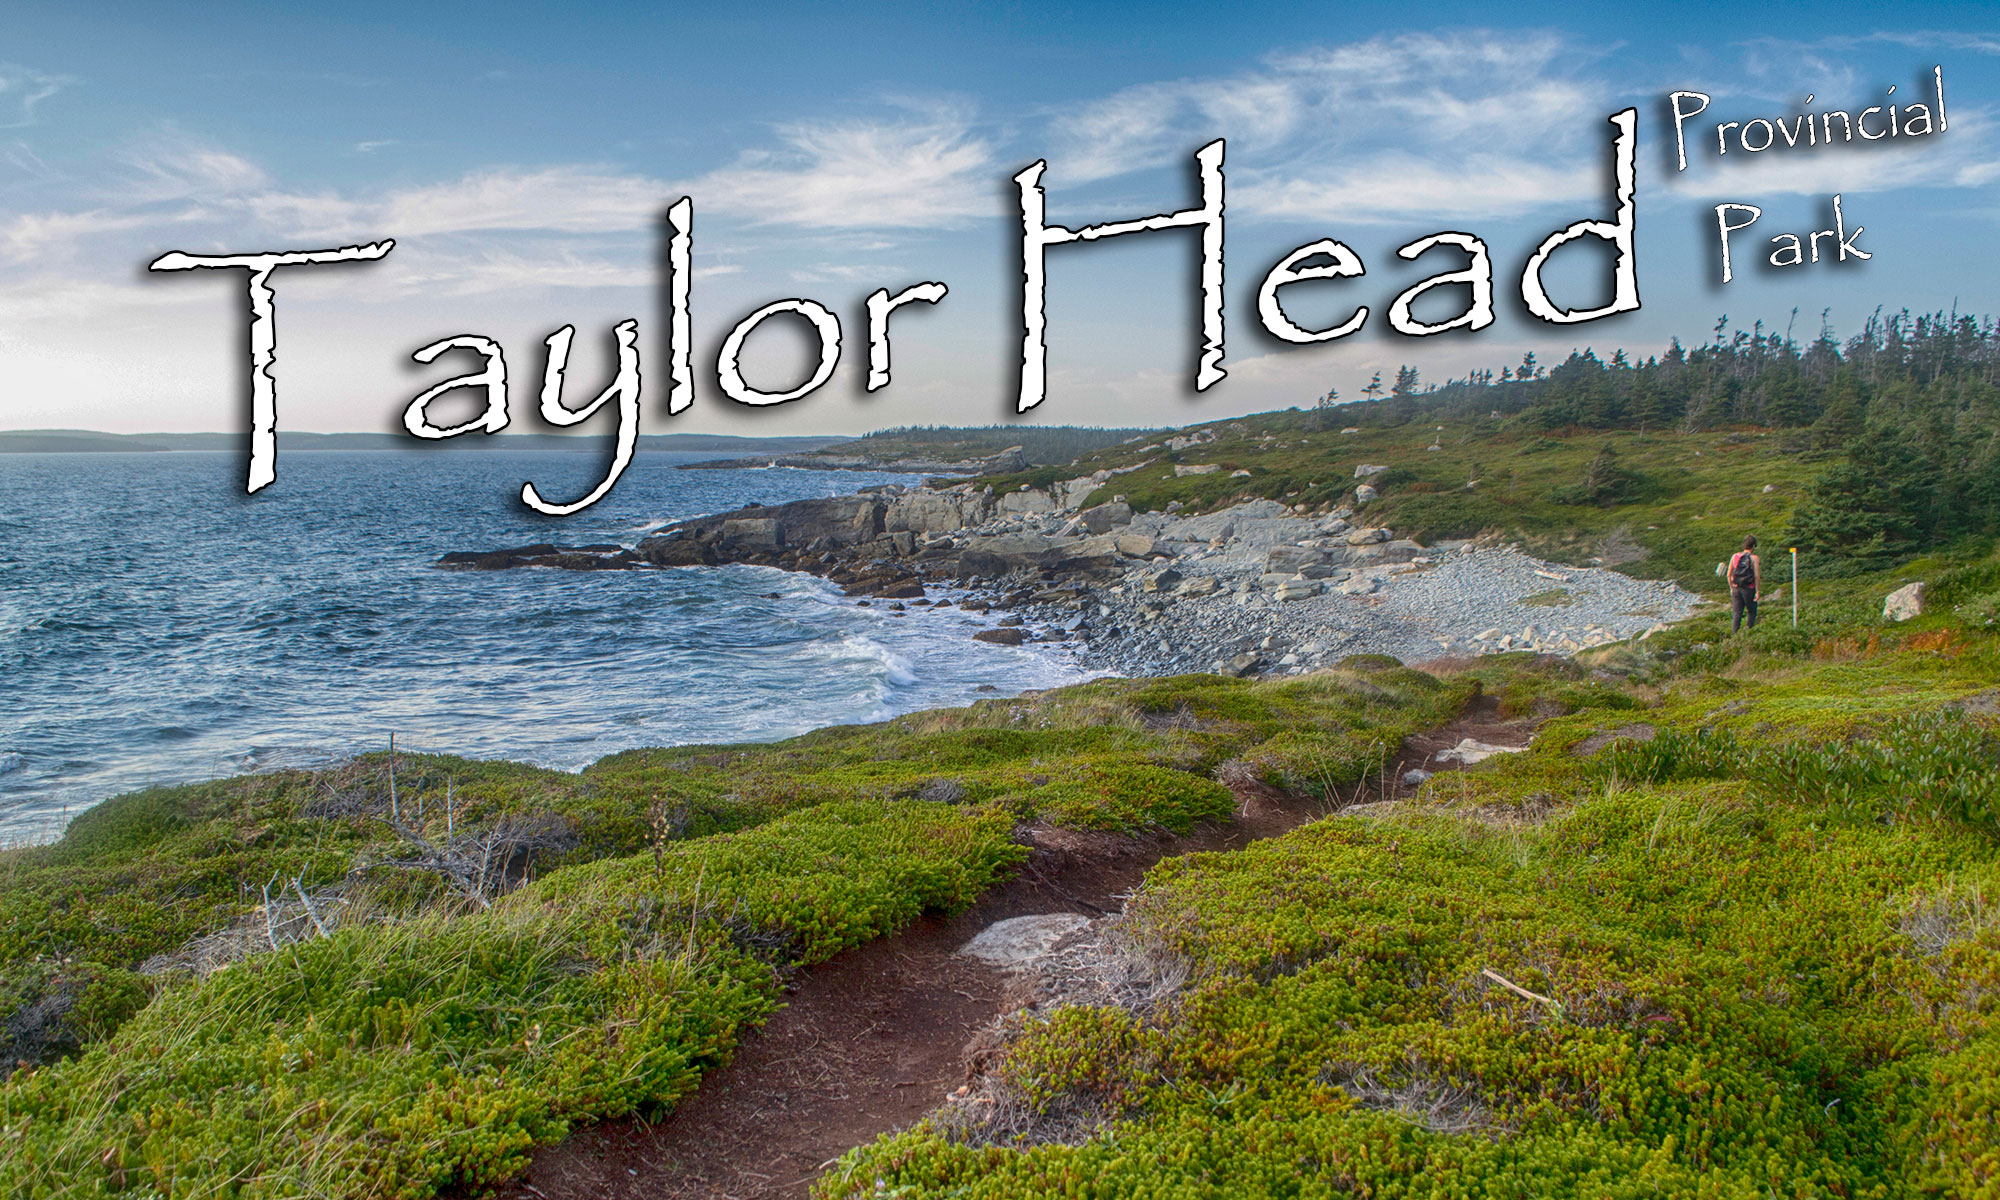 Taylor Head Provincial Park